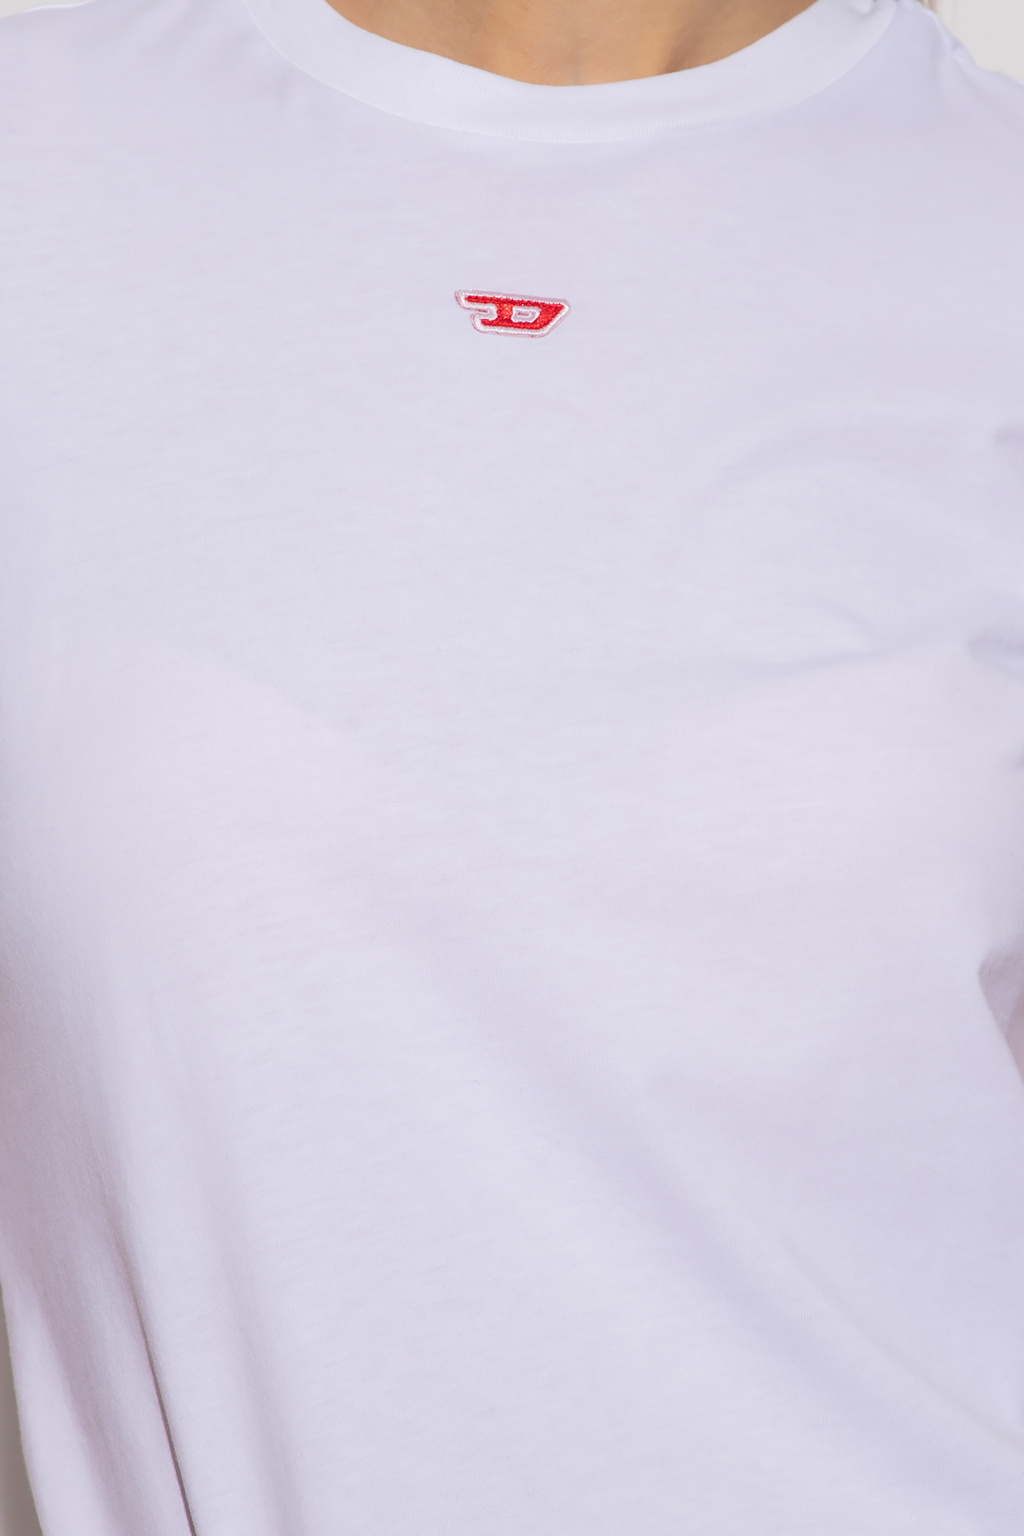 White 'T-Reg-D' T-shirt Diesel - Vitkac GB